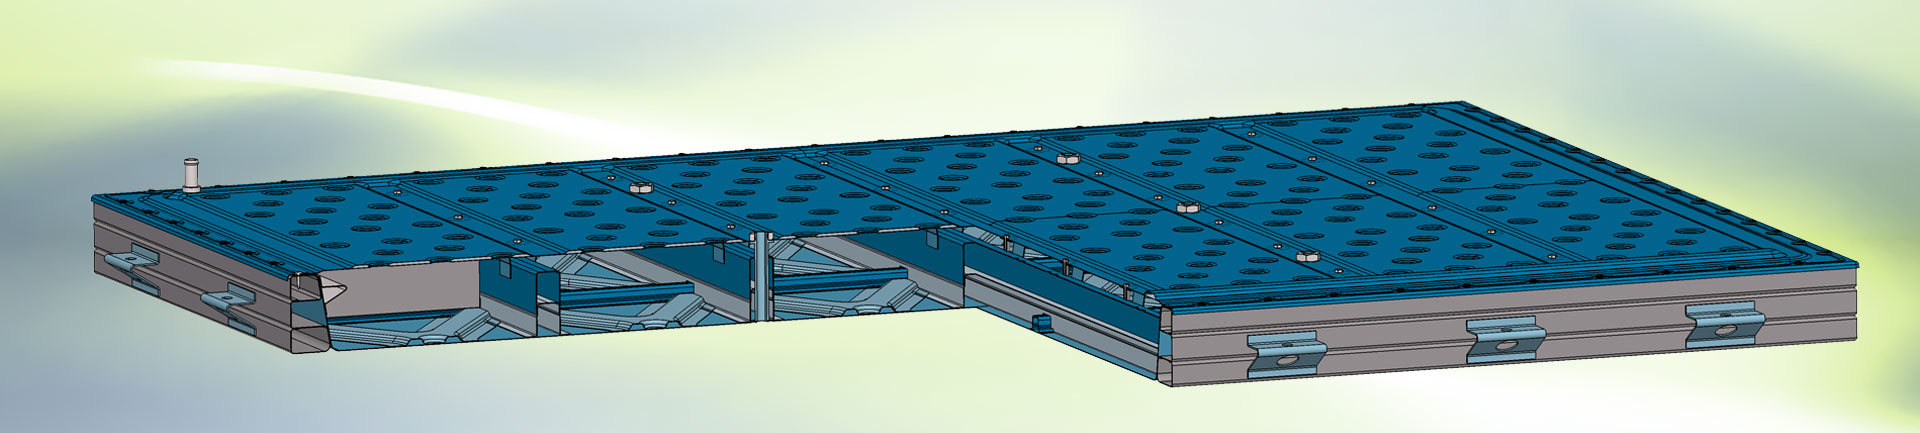 Steel-Tray Design